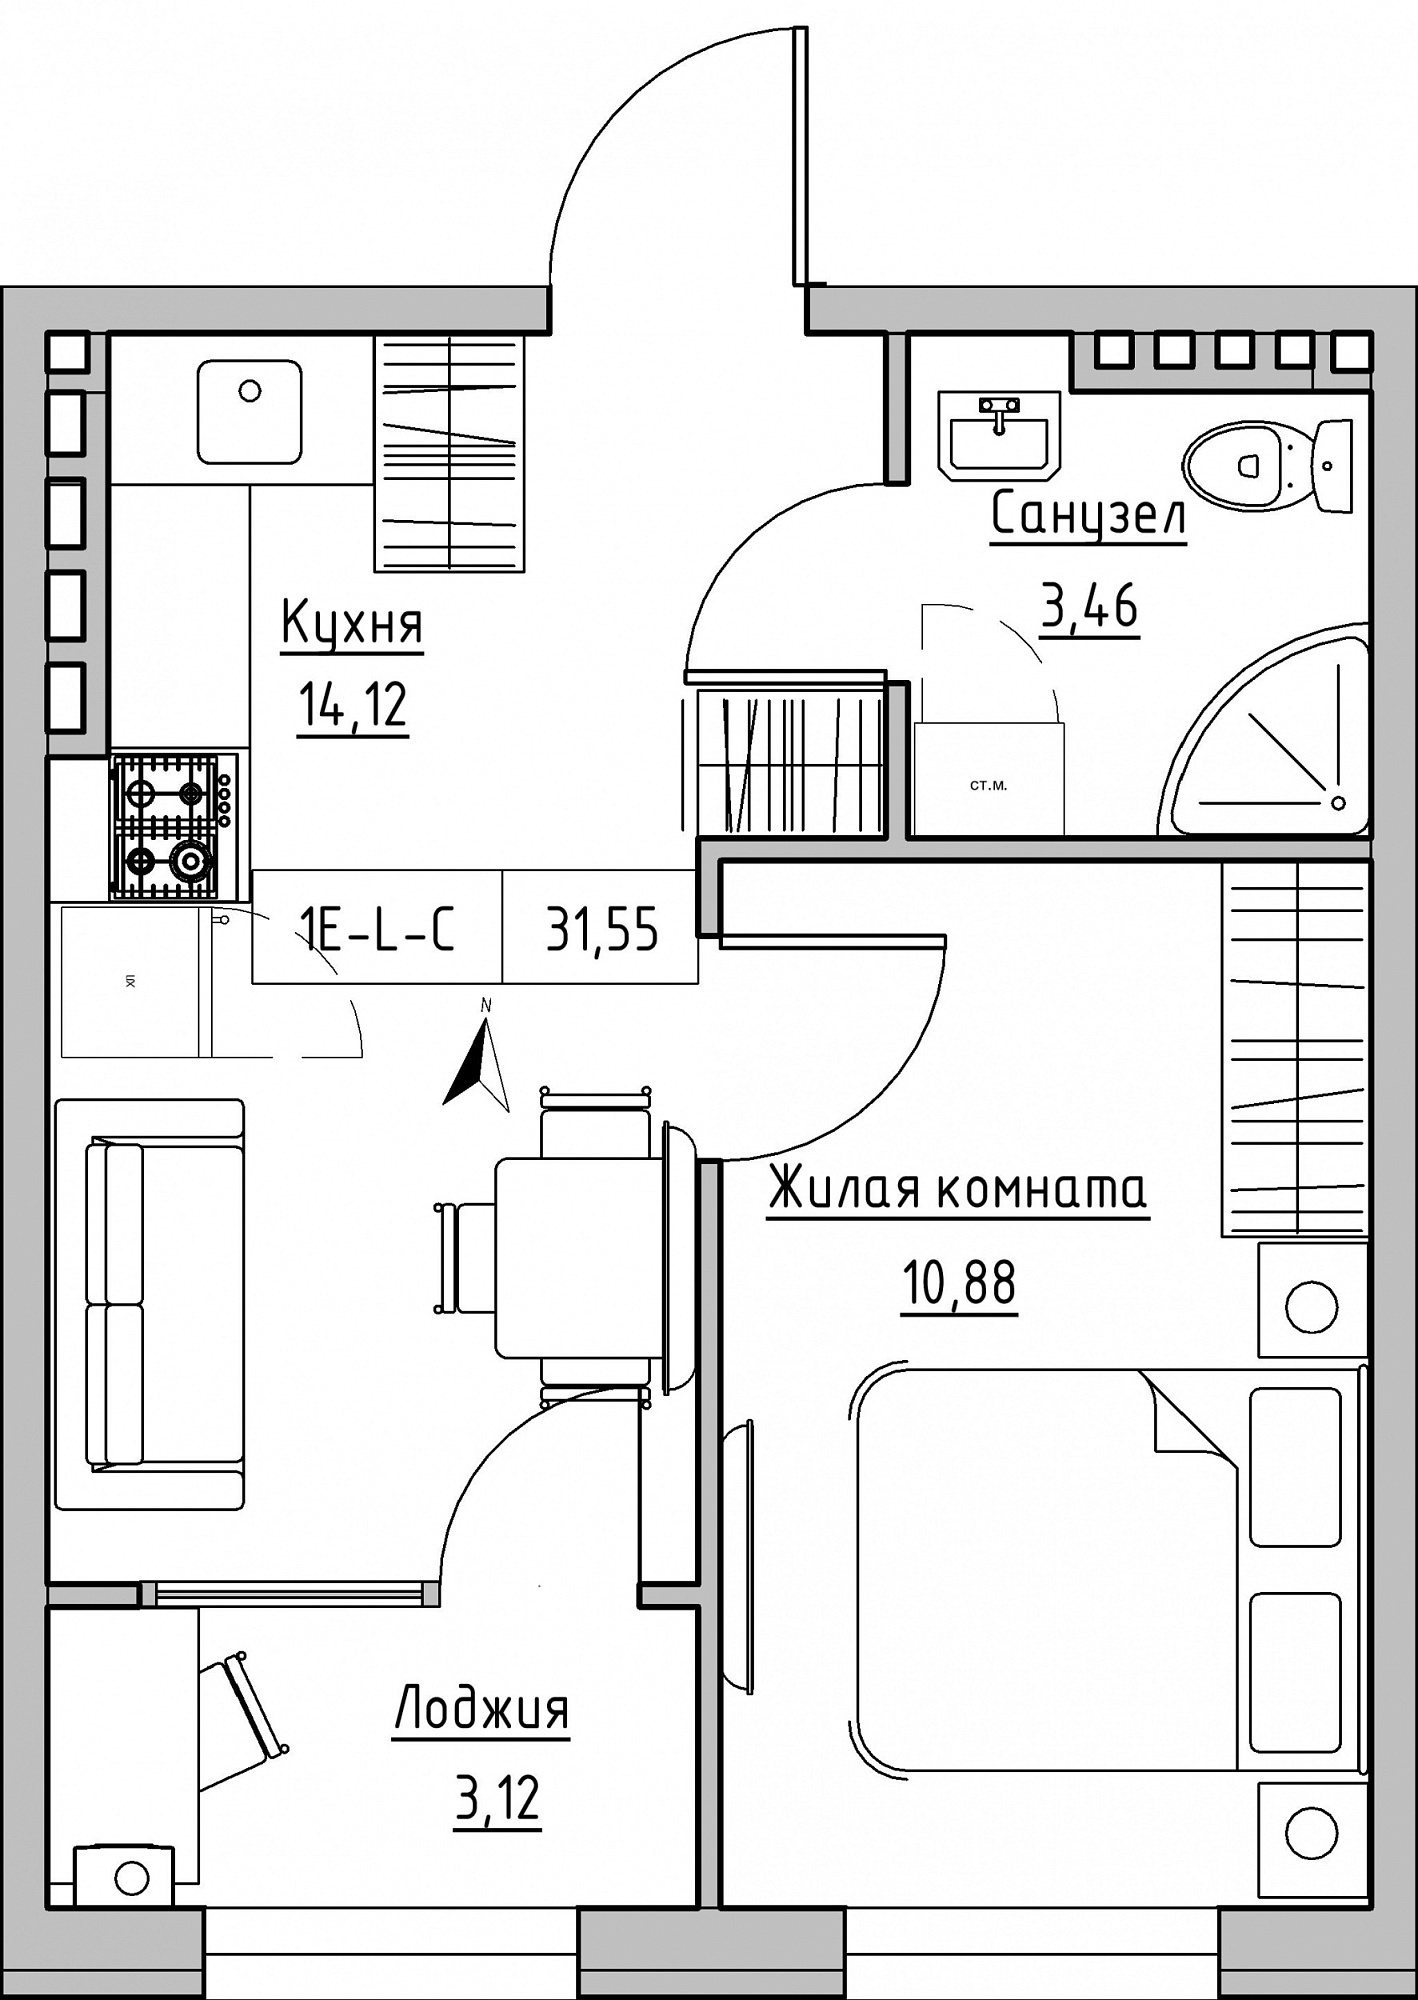 Planning 1-rm flats area 31.55m2, KS-024-04/0007.